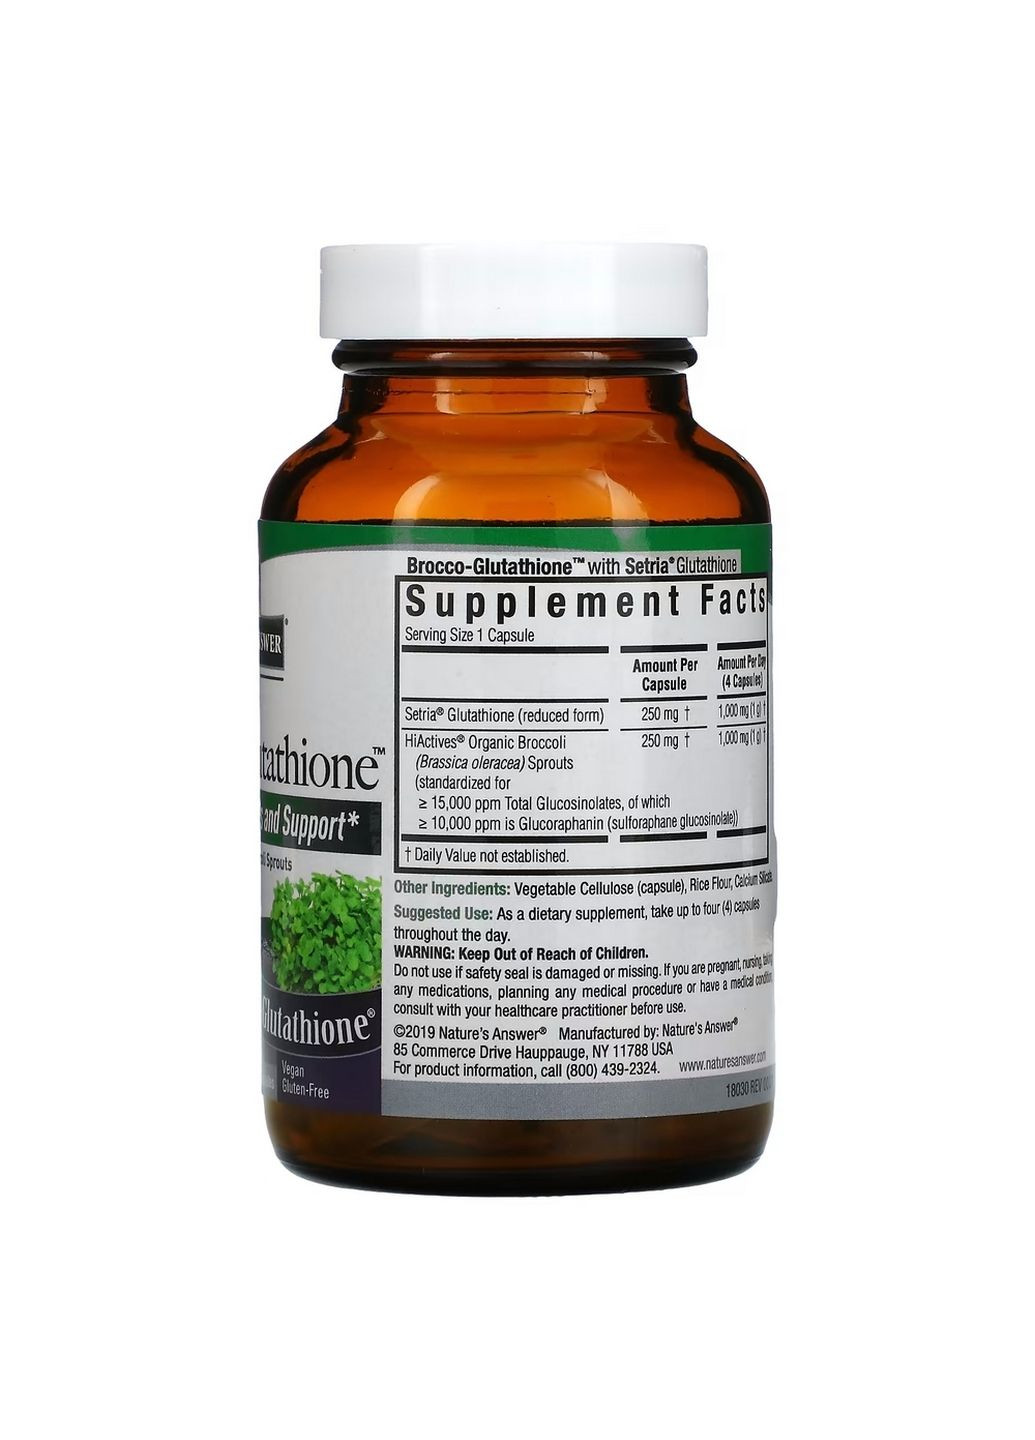 Натуральная добавка Brocco-Glutathione 500 mg, 60 вегакапсул Nature's Answer (293421467)